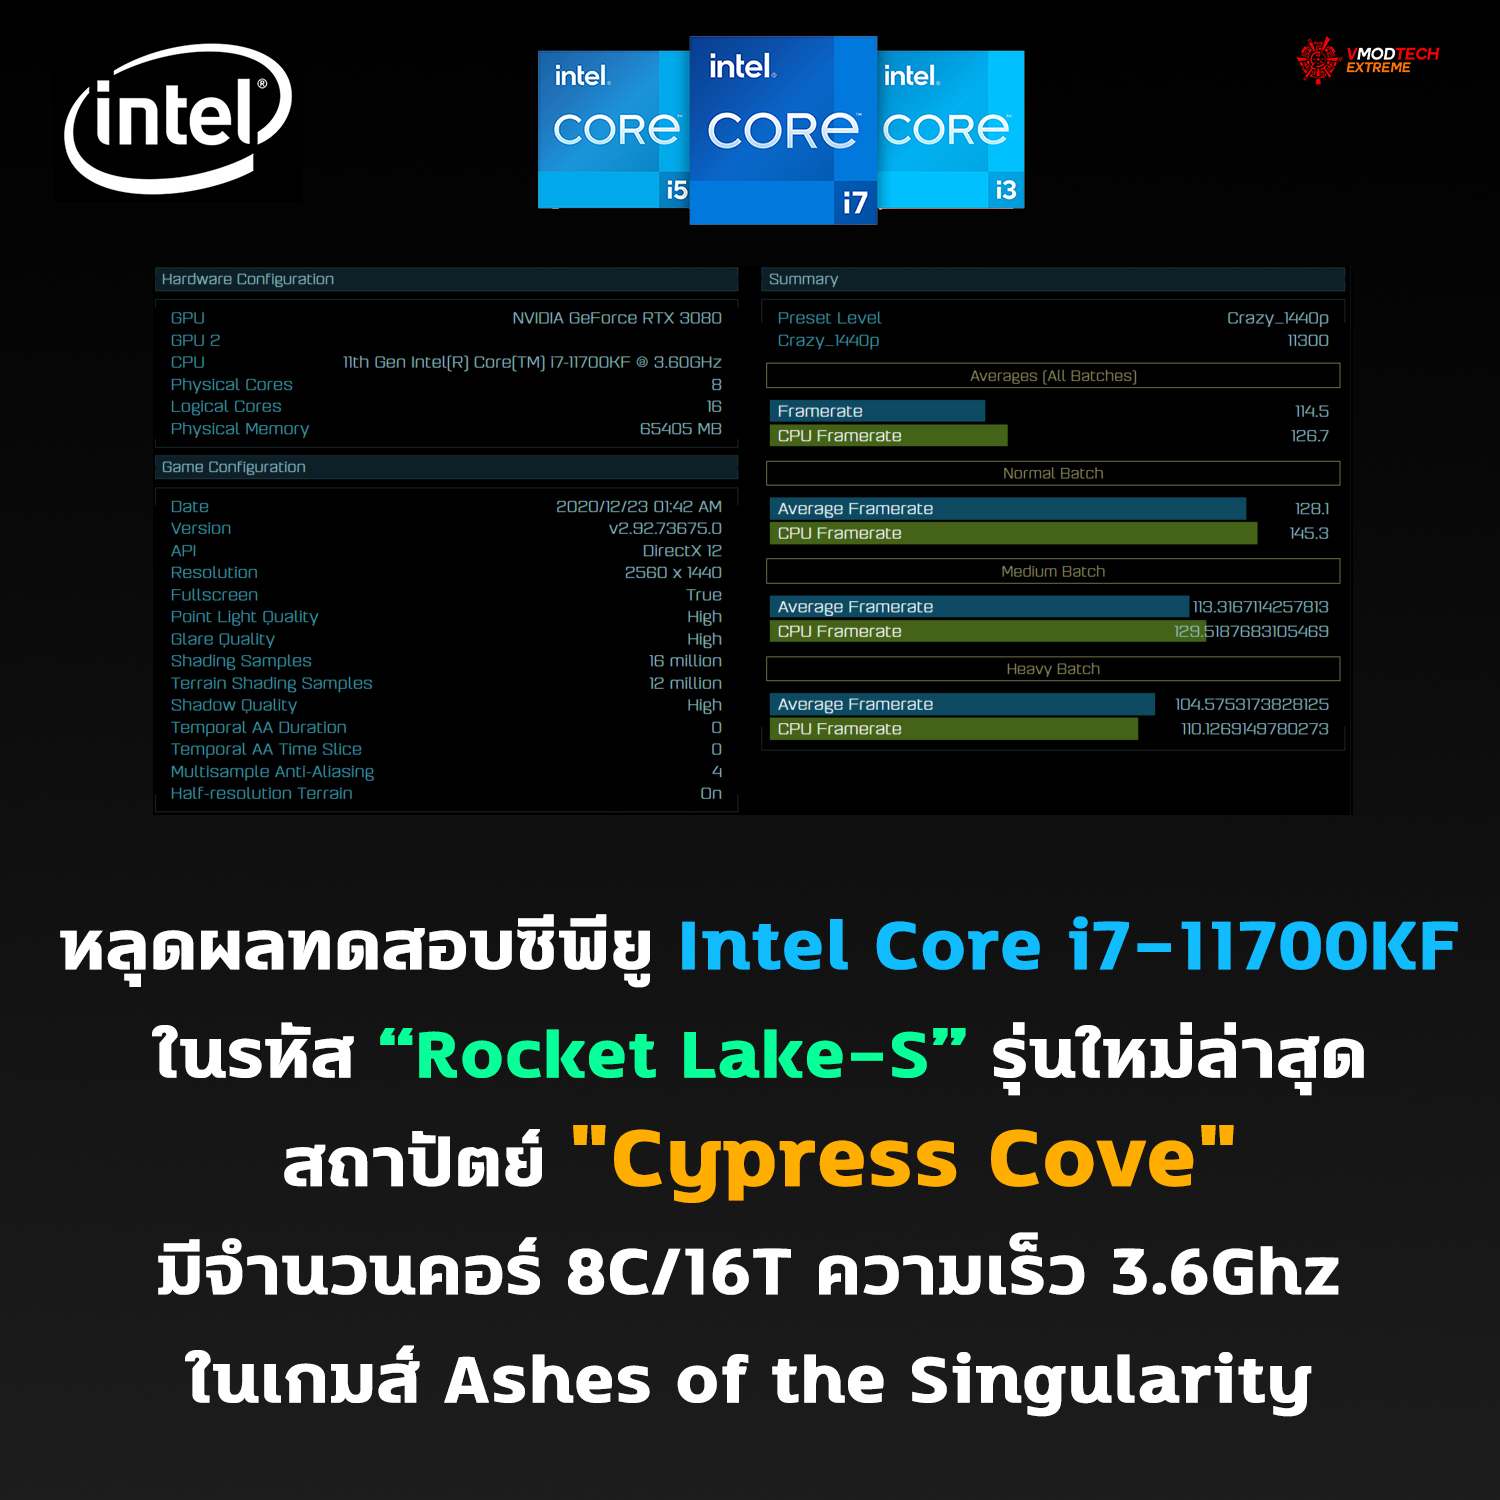 intel core i7 11700kf rocket lake s หลุดผลทดสอบซีพียู Intel Core i7 11700KF ในรหัส Rocket Lake S รุ่นใหม่ล่าสุดในเกมส์ Ashes of the Singularity 